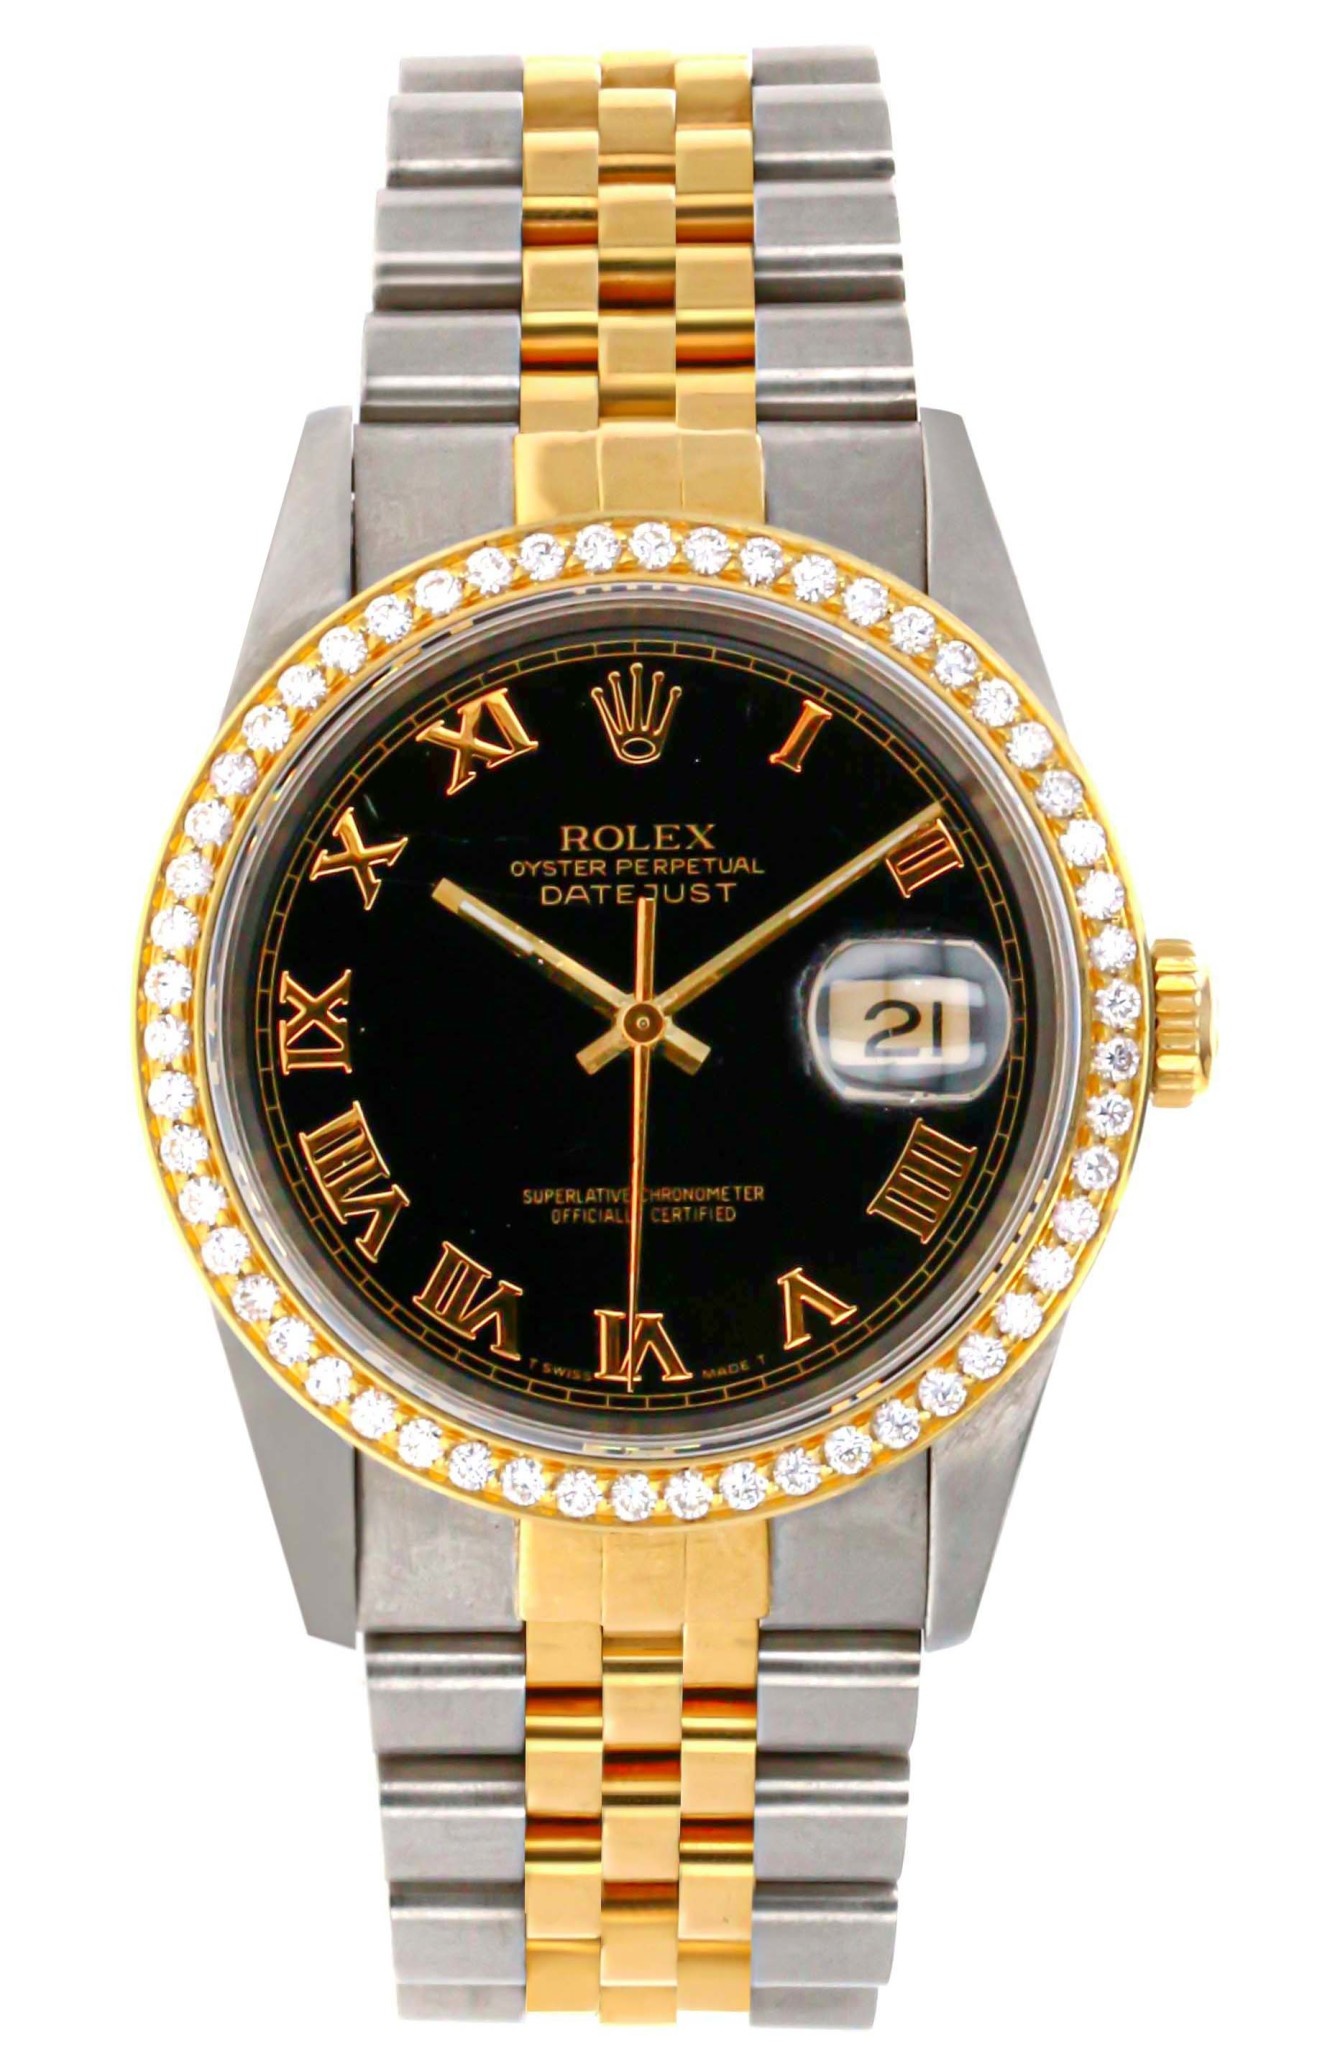 Rolex Datejust #16233 36MM (1994 